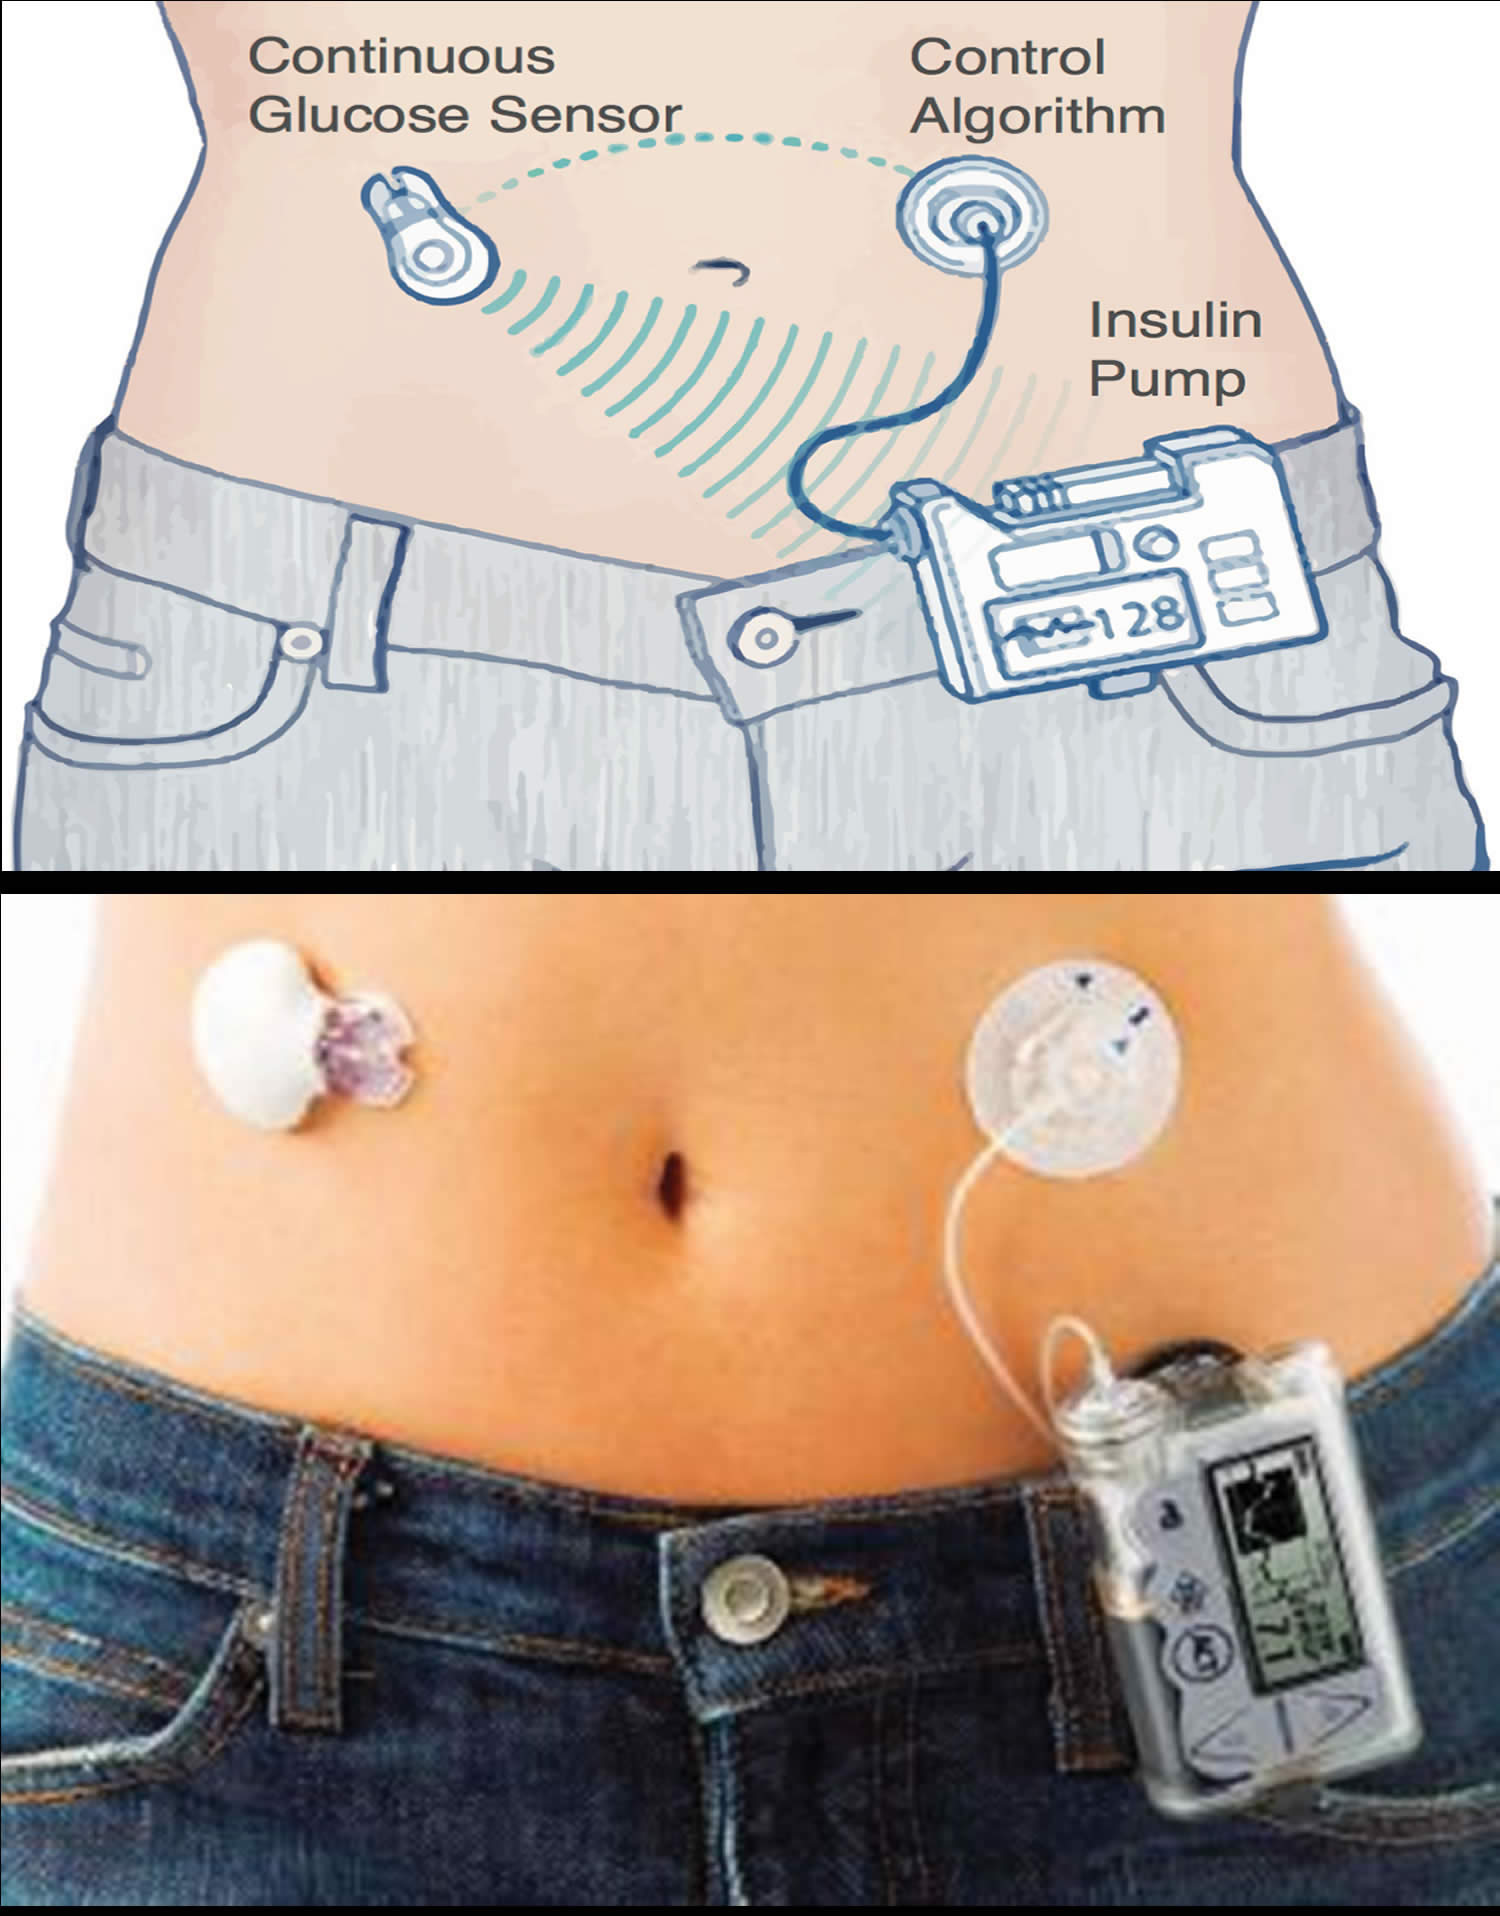 Insulin pump for type 1 diabetes